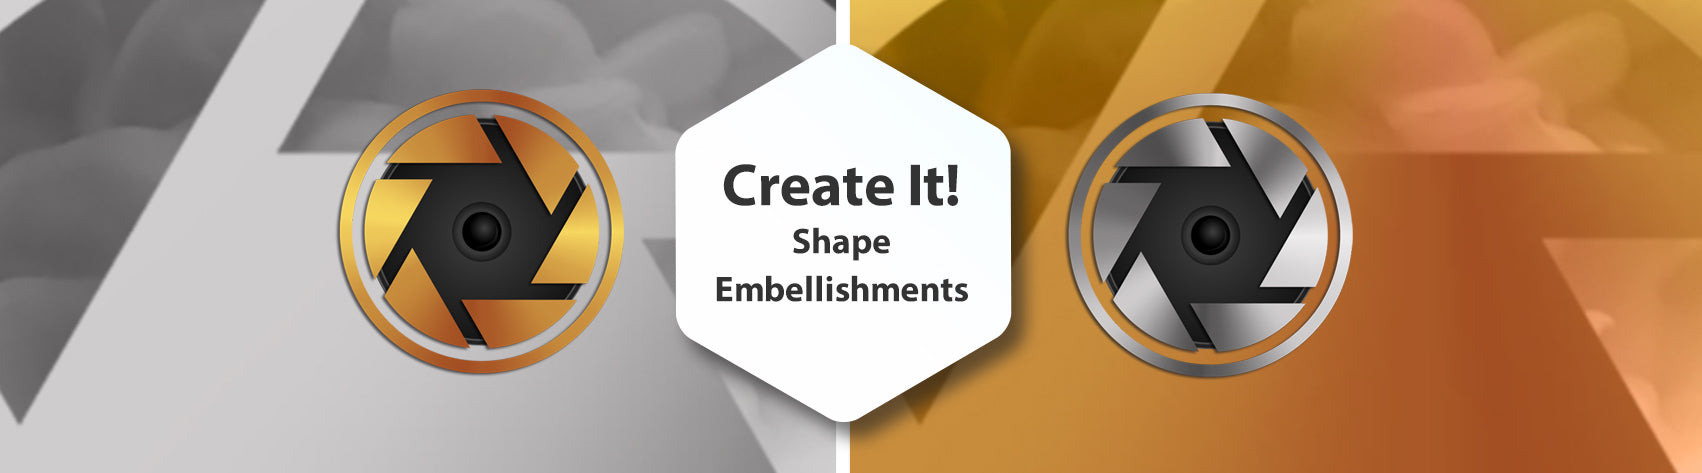 Create It - Shape Embellishments